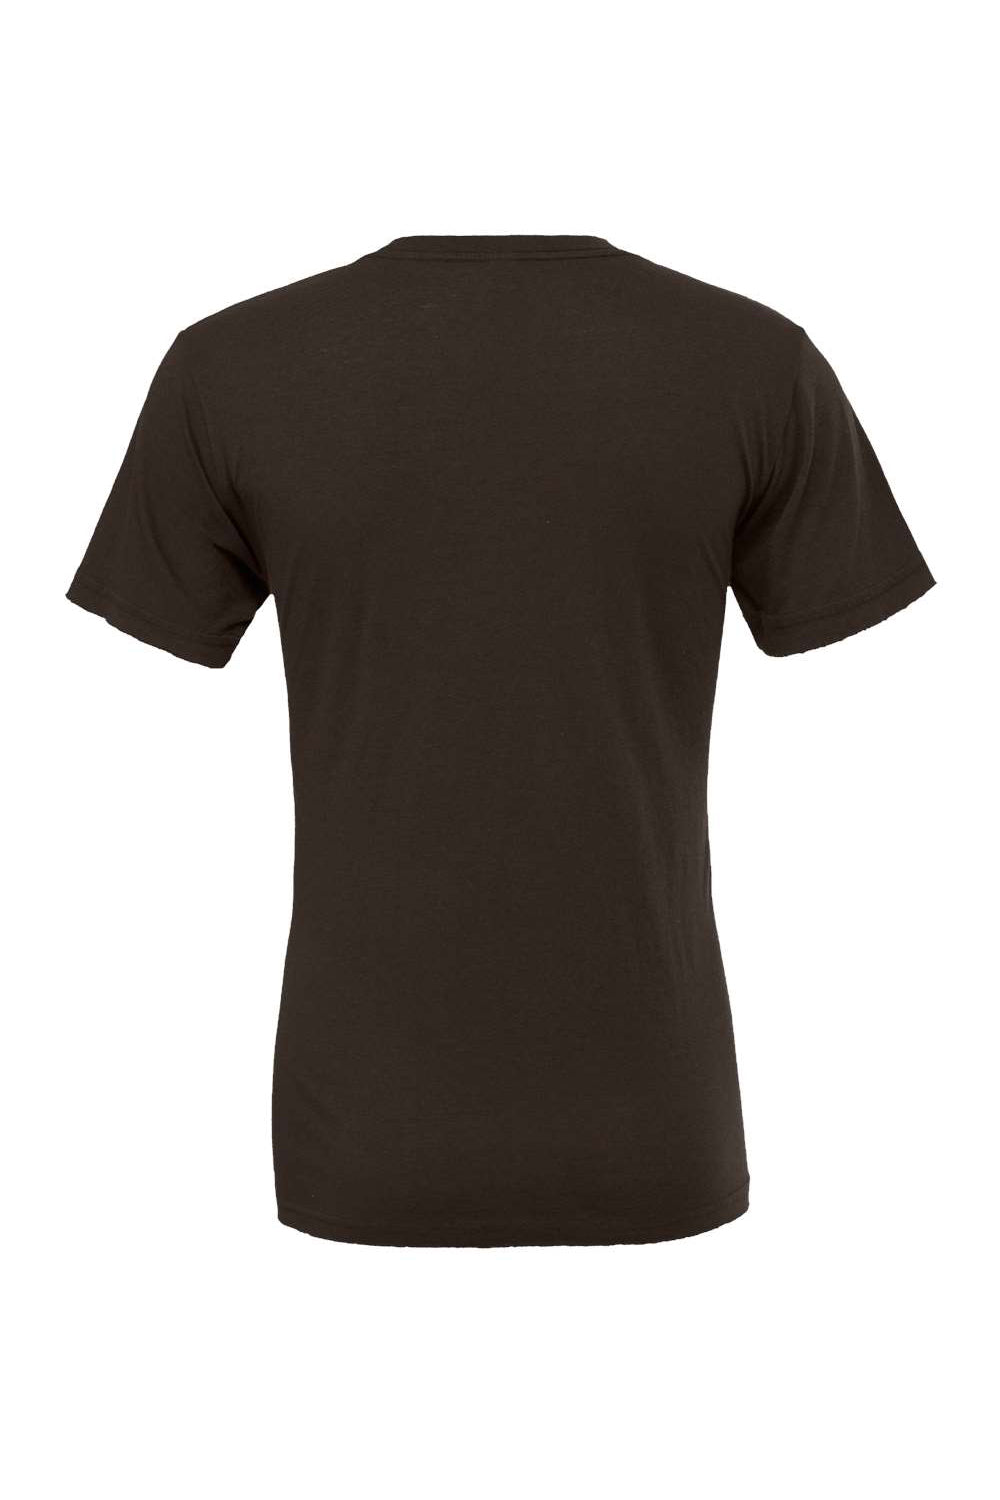 Bella + Canvas BC3001/3001C Mens Jersey Short Sleeve Crewneck T-Shirt Brown Flat Back